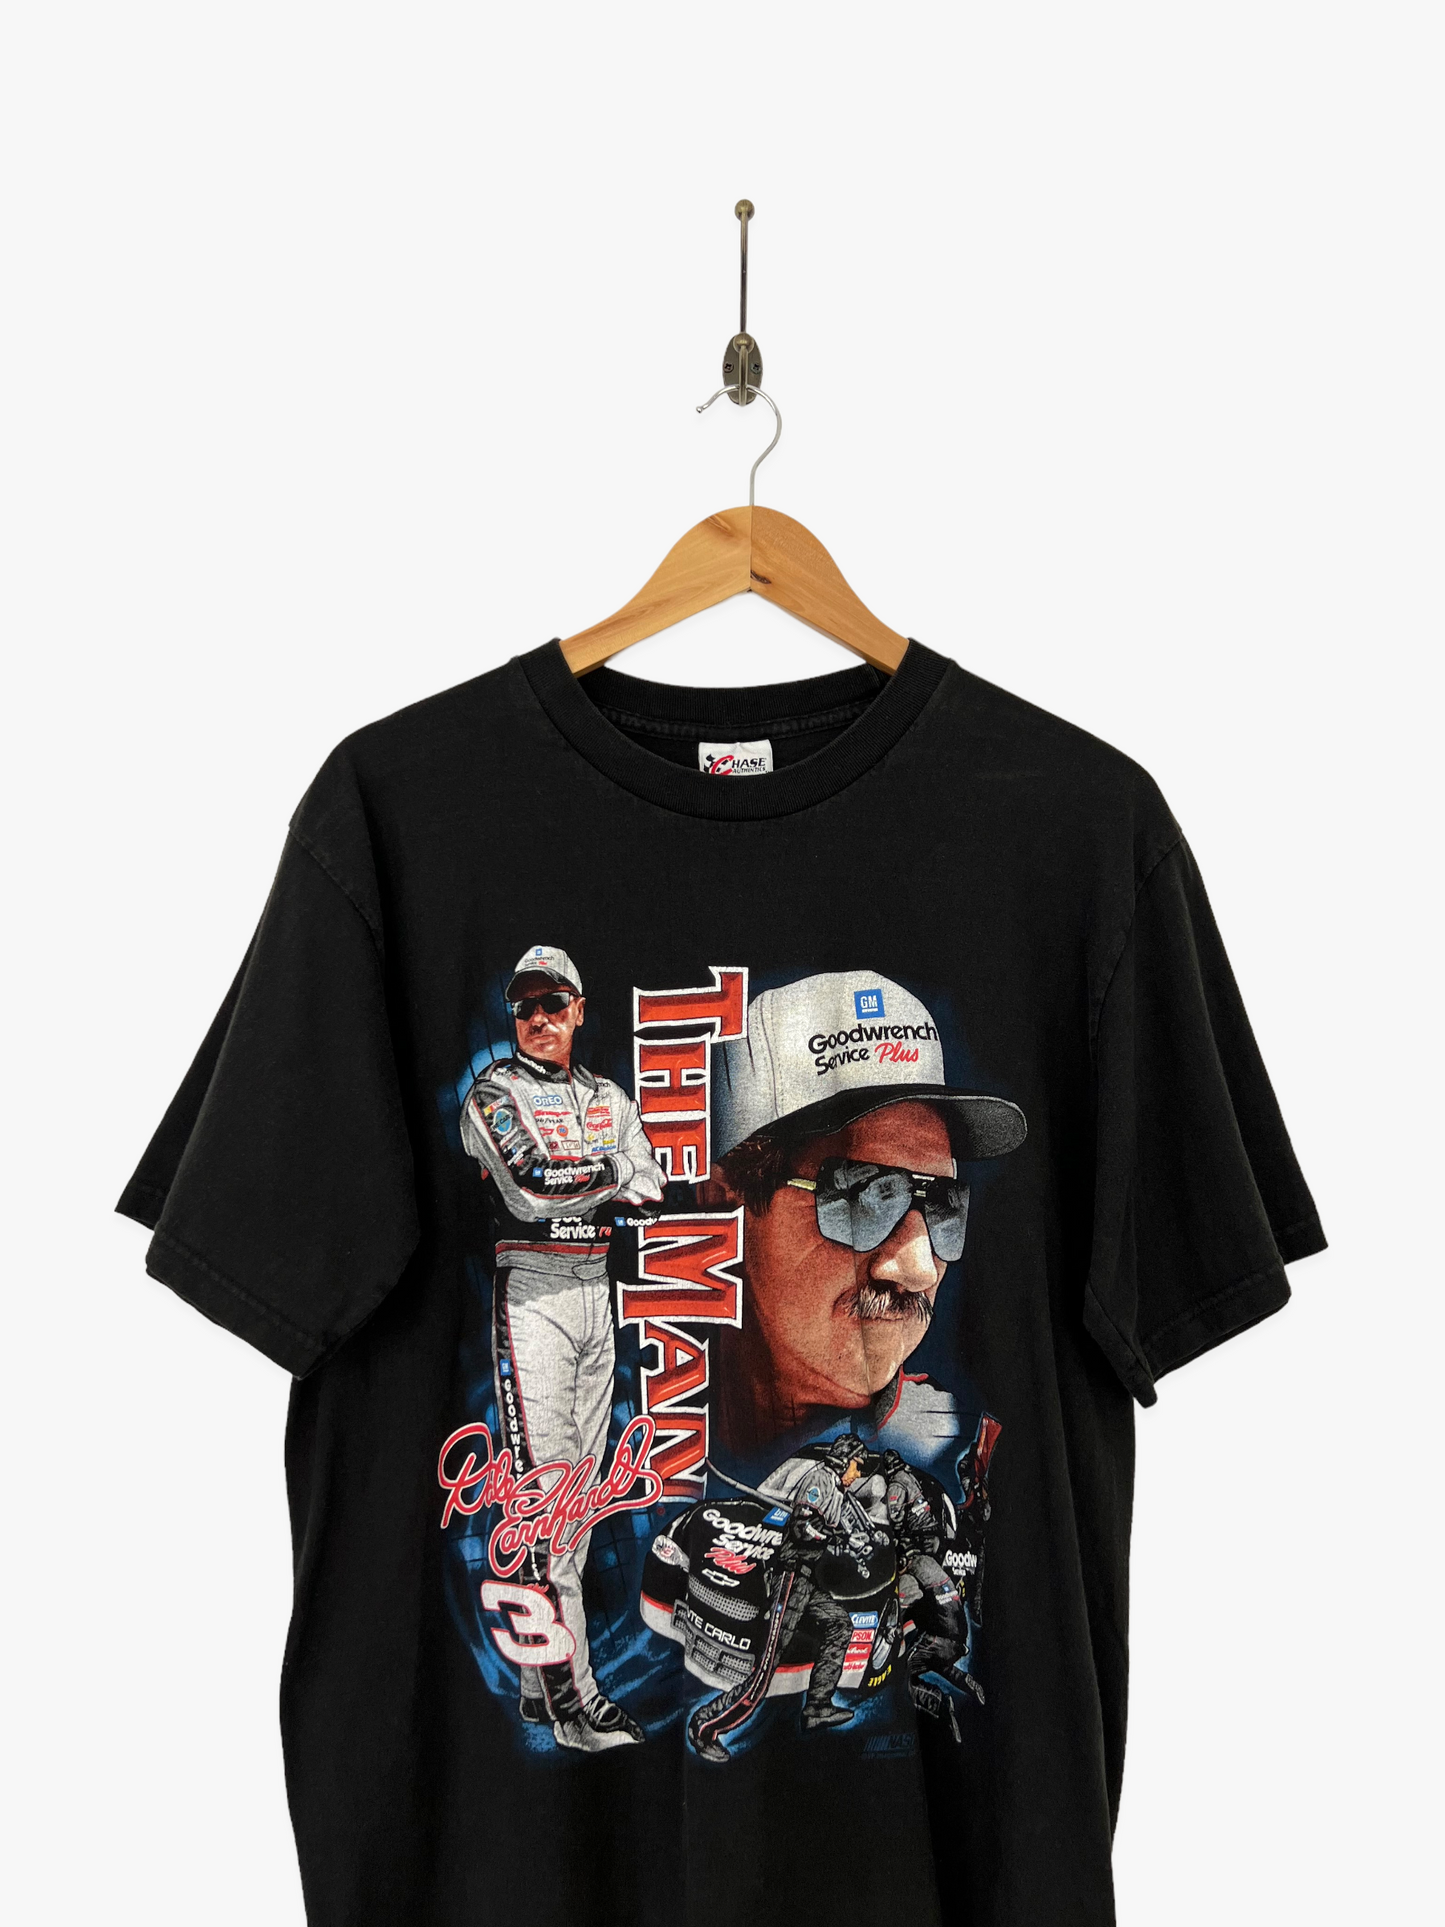 90's NASCAR Dale Earnhardt Vintage Racing T-Shirt Size 10